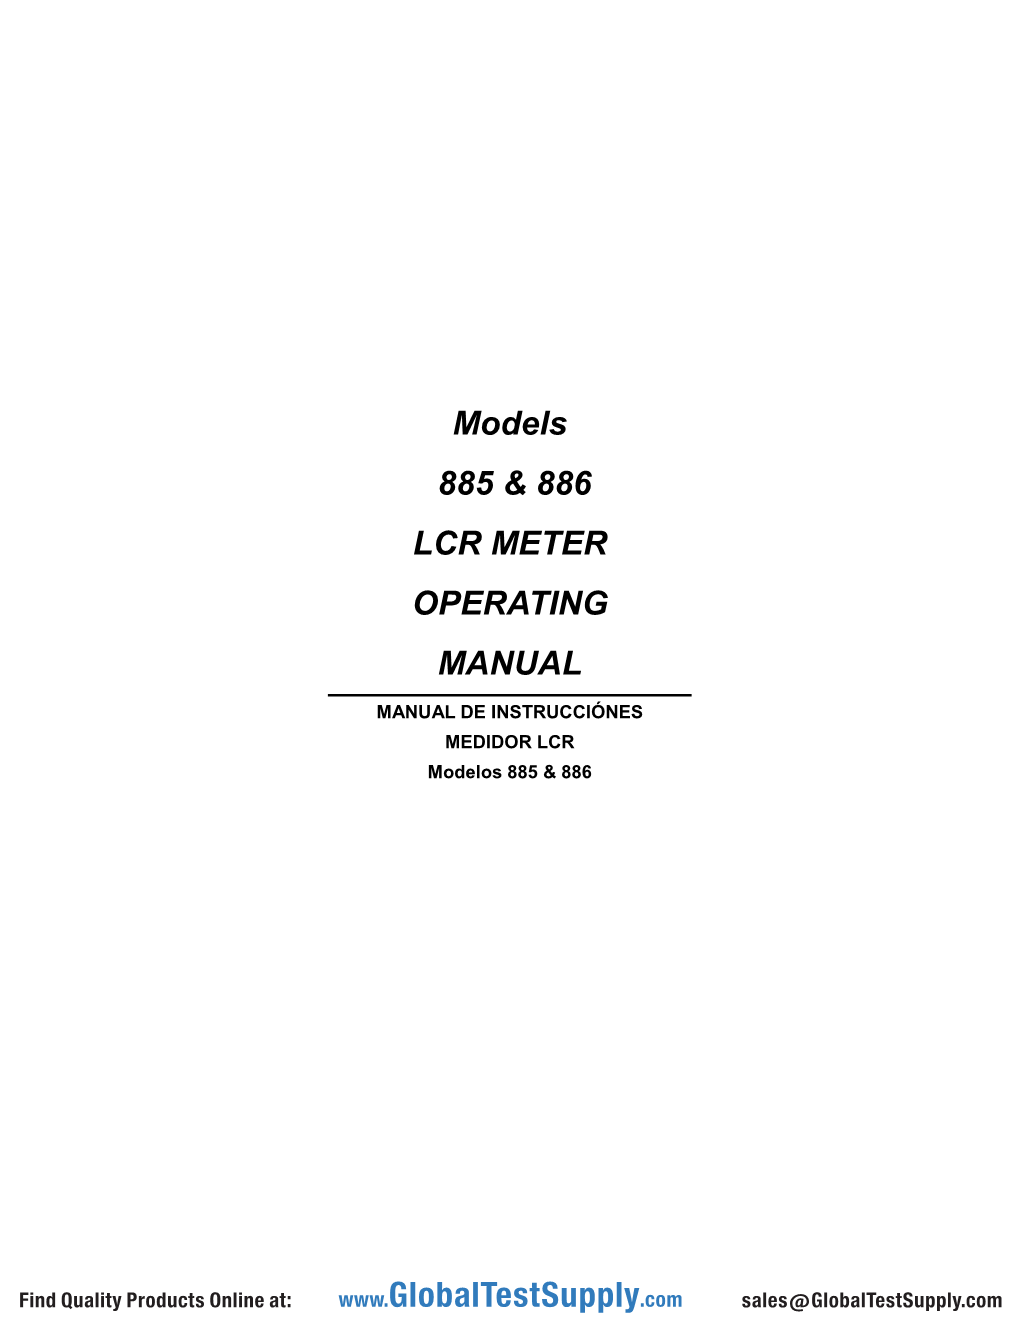 Models 885 & 886 LCR METER OPERATING MANUAL